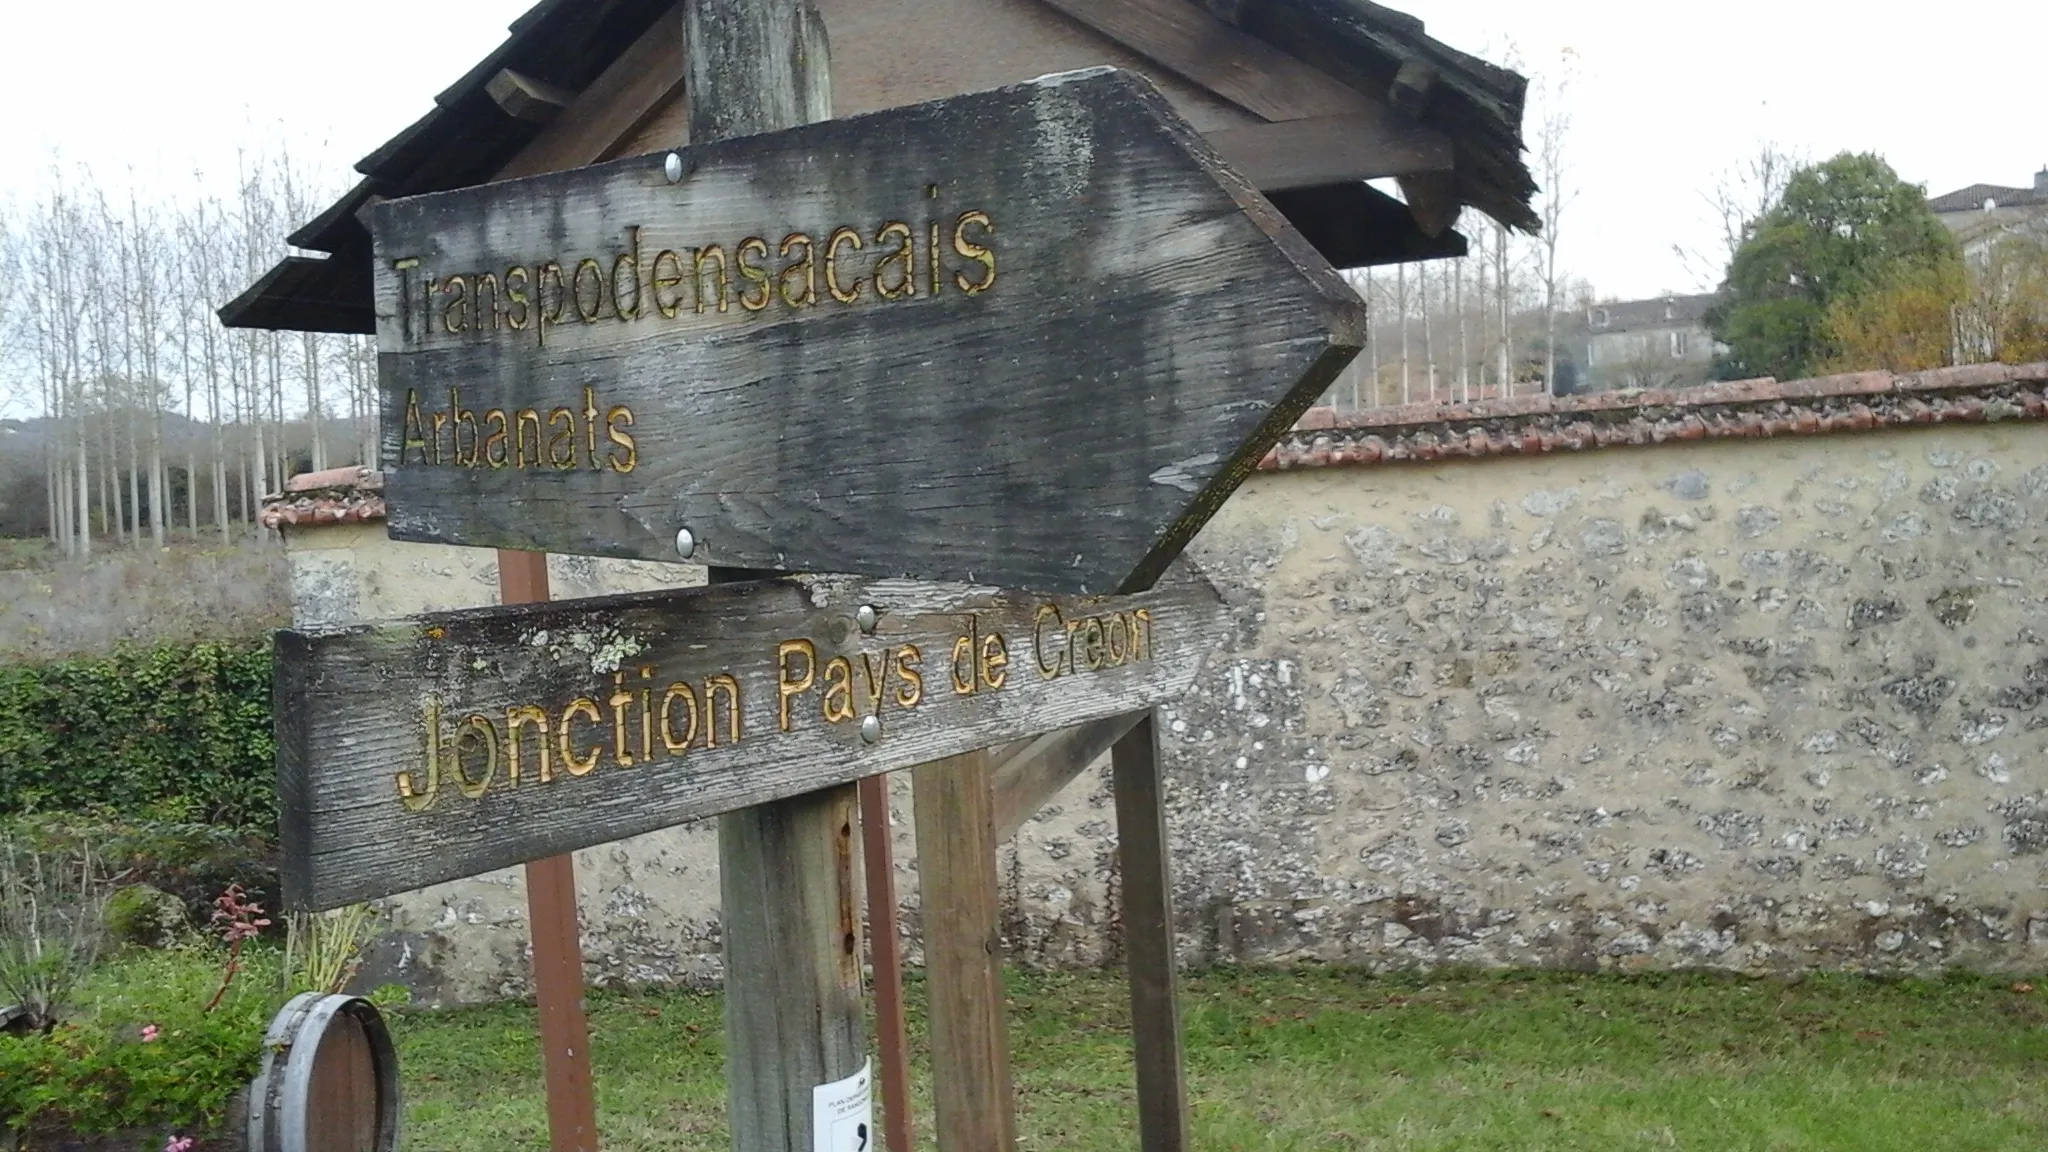 Photo showing: Transpodensacais, Arbanats;
Jonction Pays de Créon;